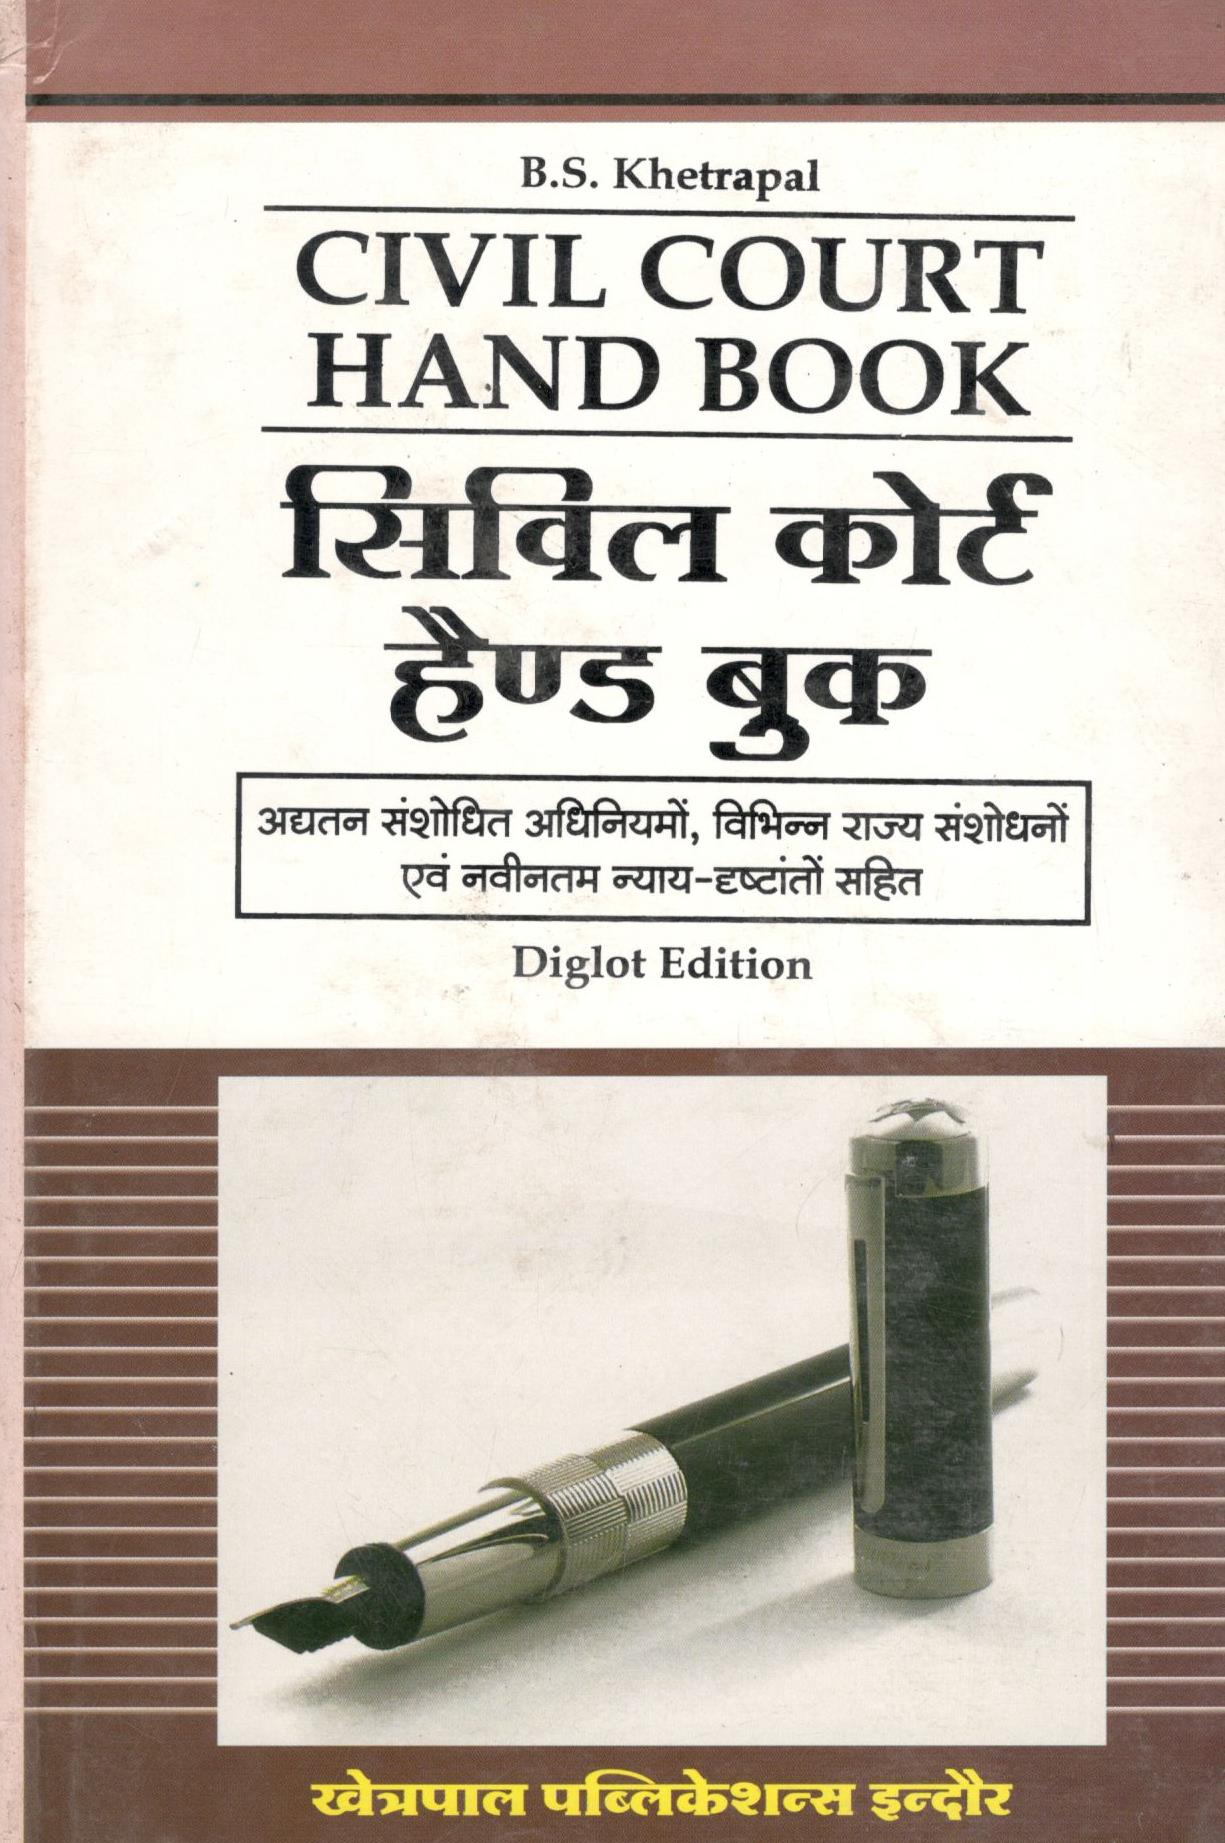 बी.एस. खेत्रपाल - सिविल कोर्ट हैंडबुक / Civil Court Hand Book